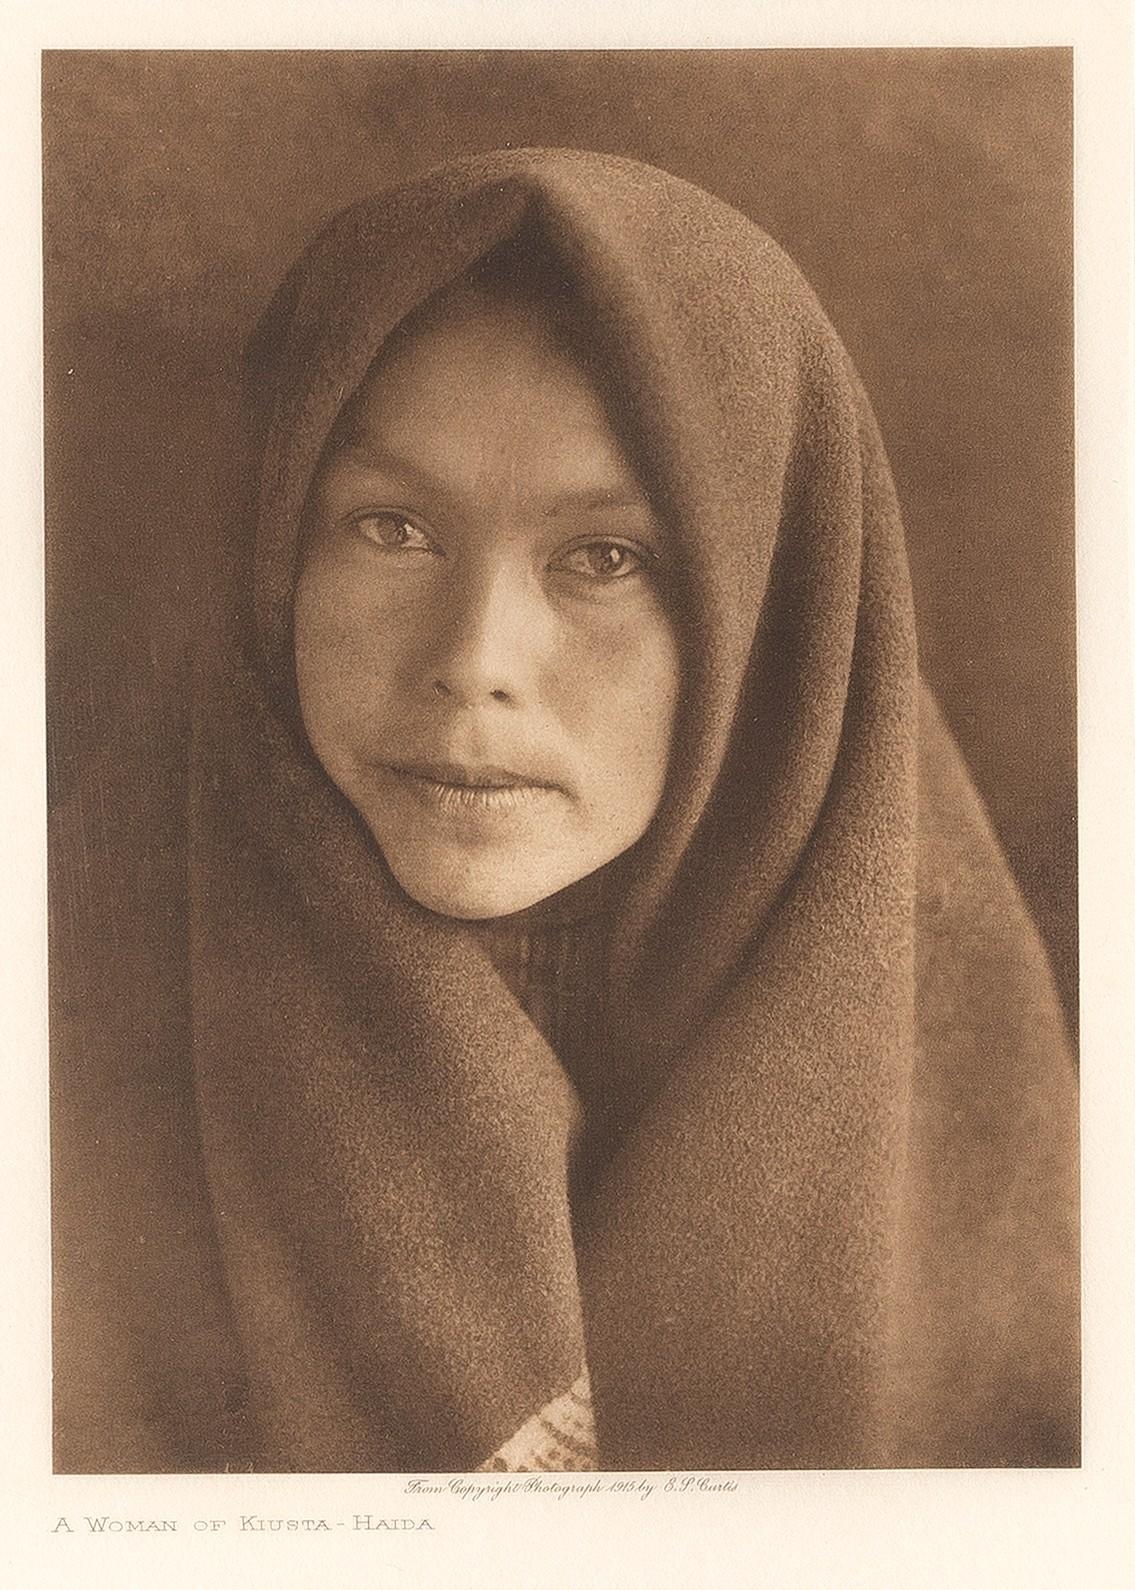 A Woman of Kiusta - Haida by Edward S. Curtis, 1915